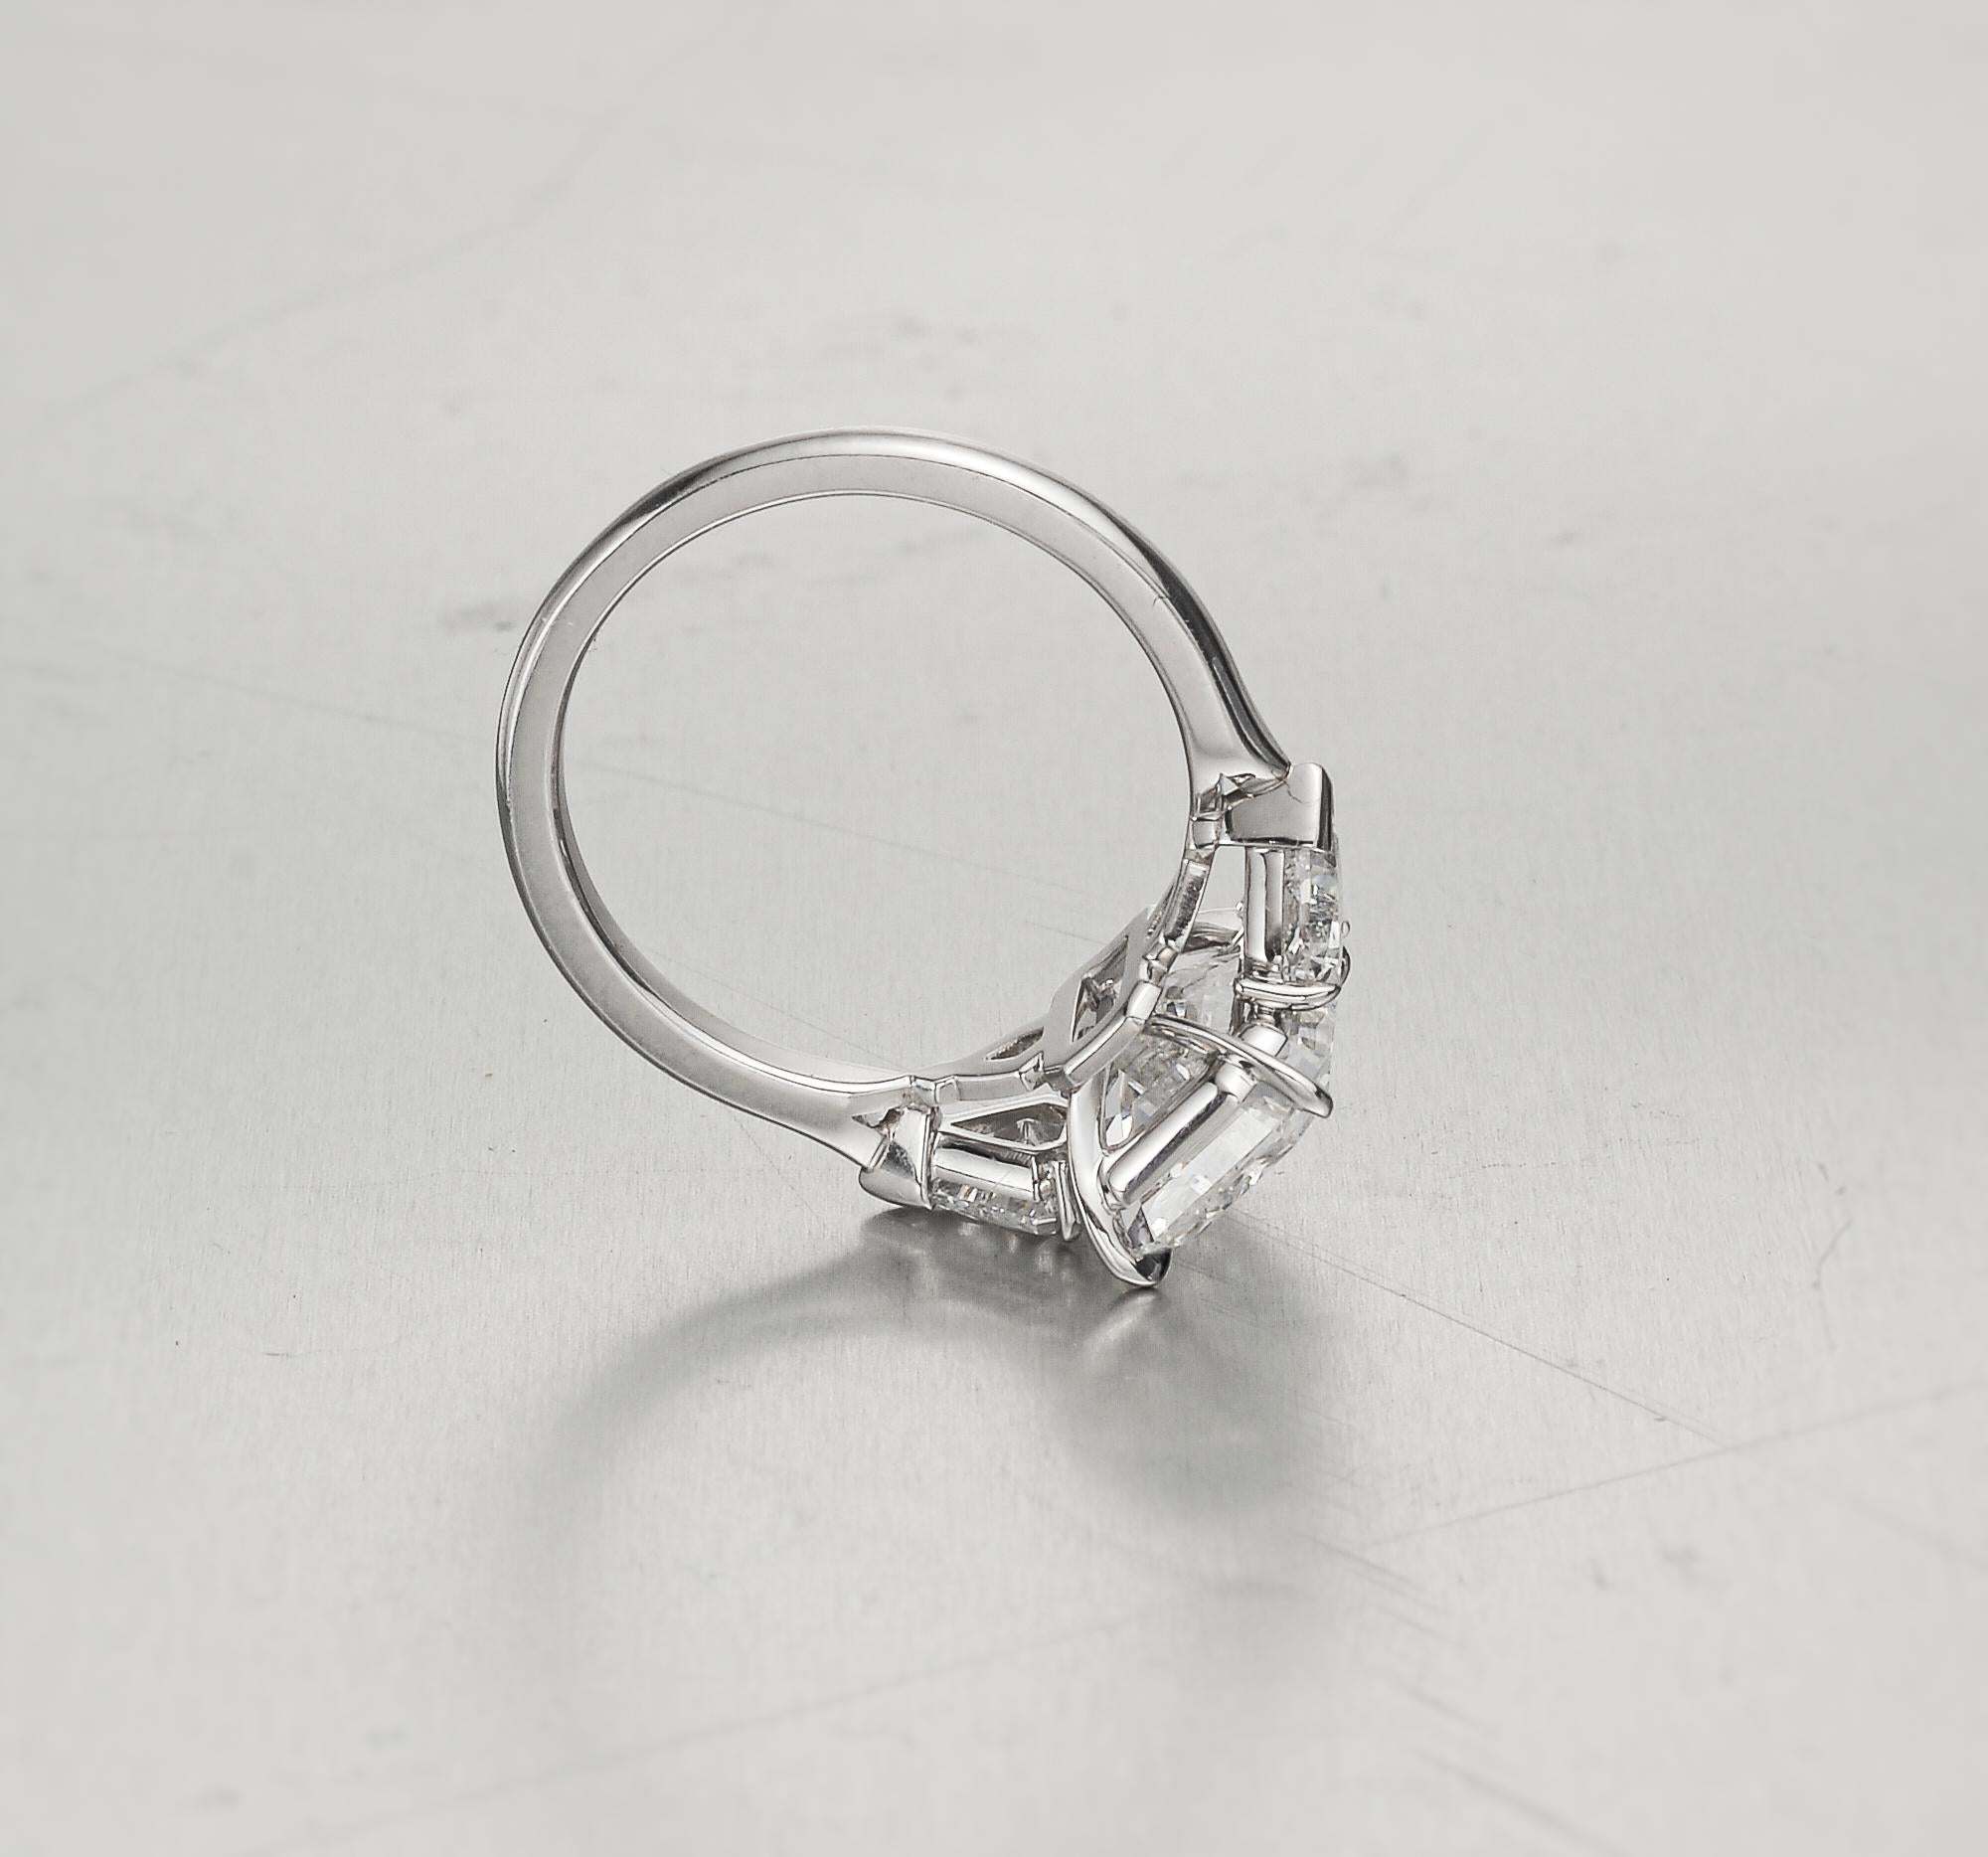 Emerald Cut Betteridge 4.01 Carat Rectangular Step-Cut Diamond Engagement Ring